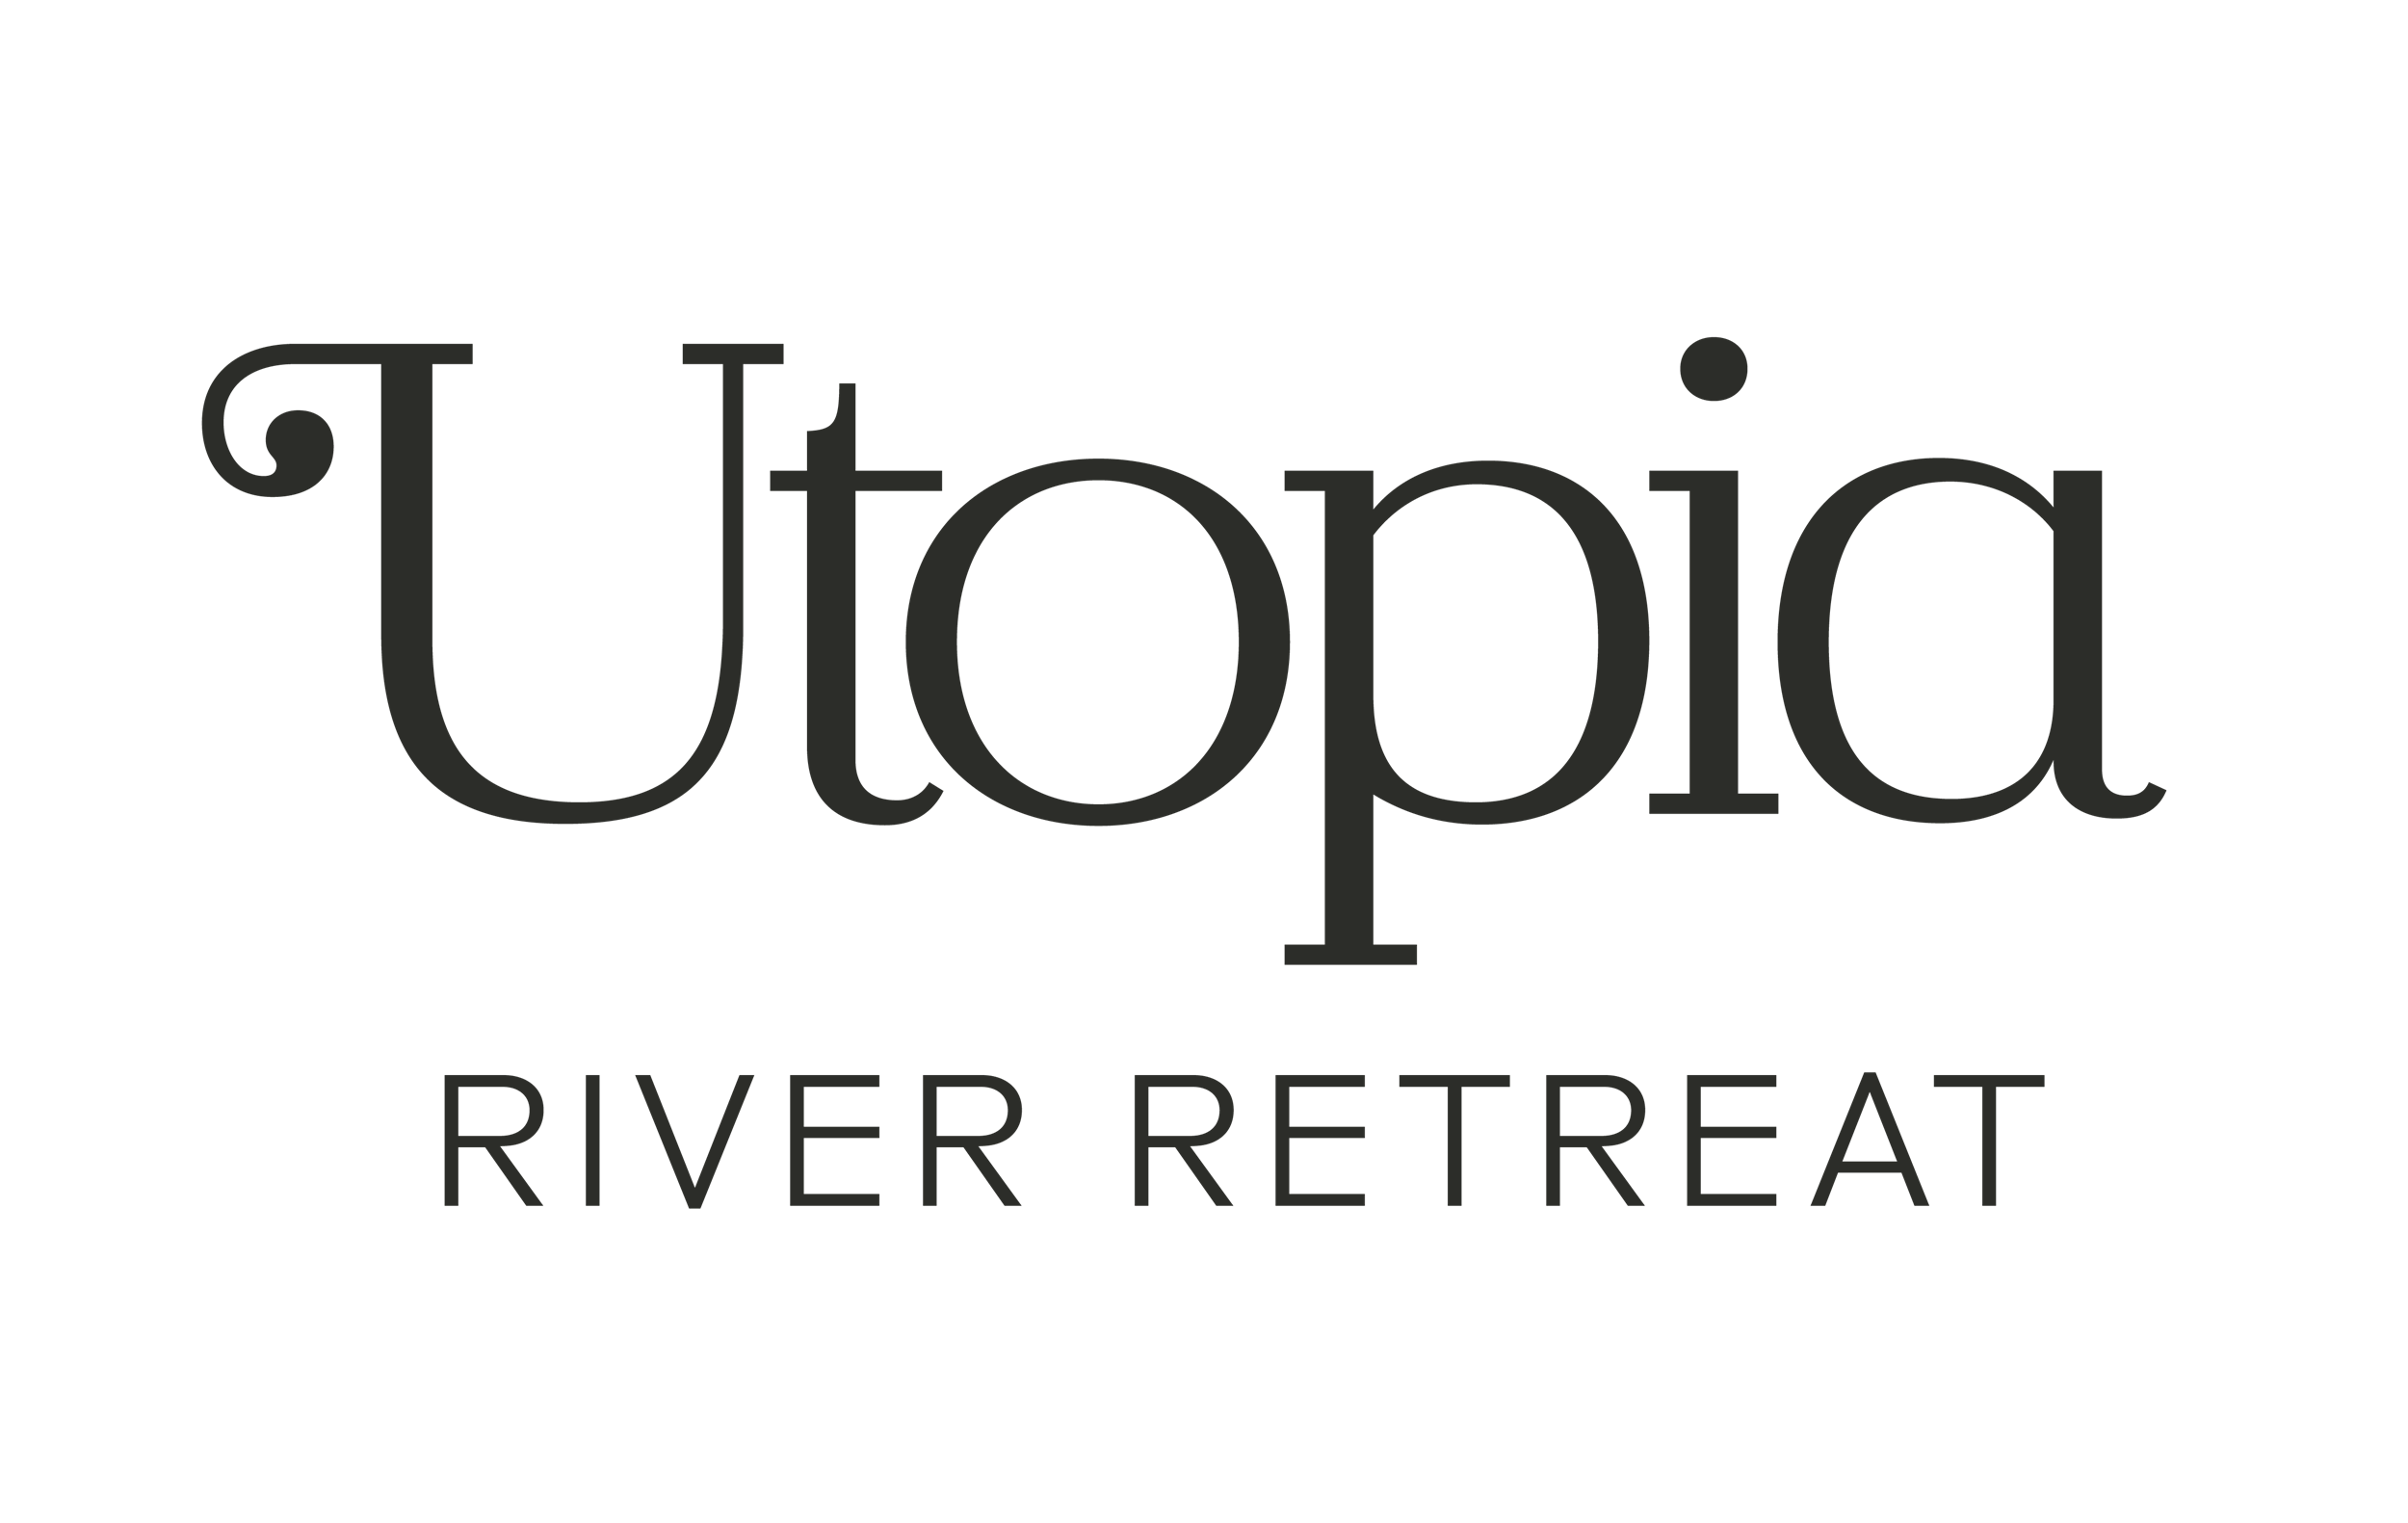 Utopia River Retreat Logo